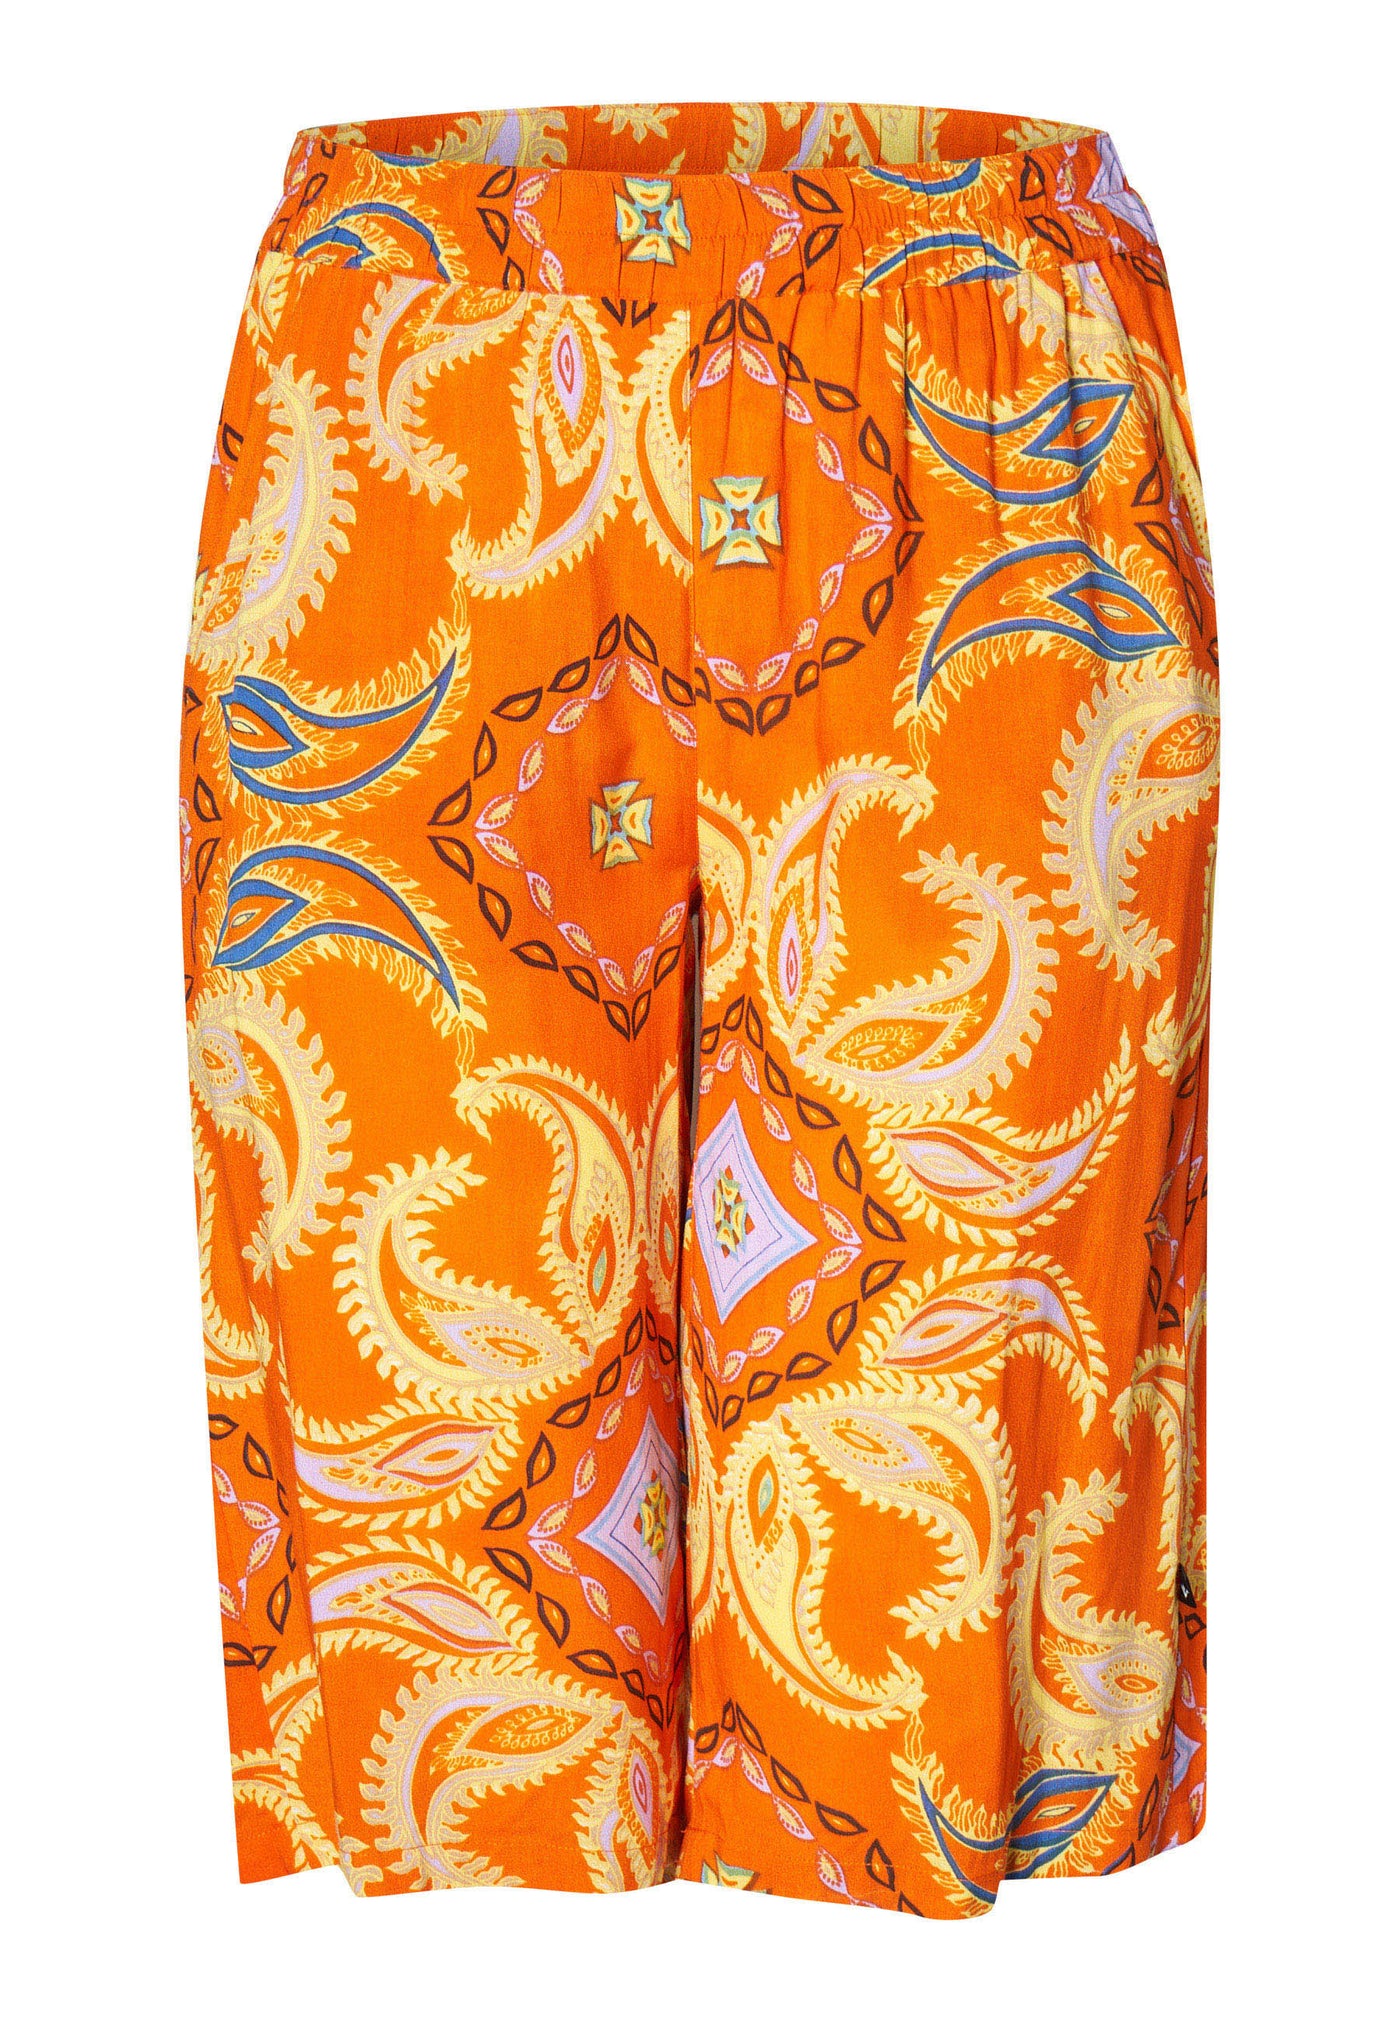 Adia ADPar Shorts 8501 Spring Orange